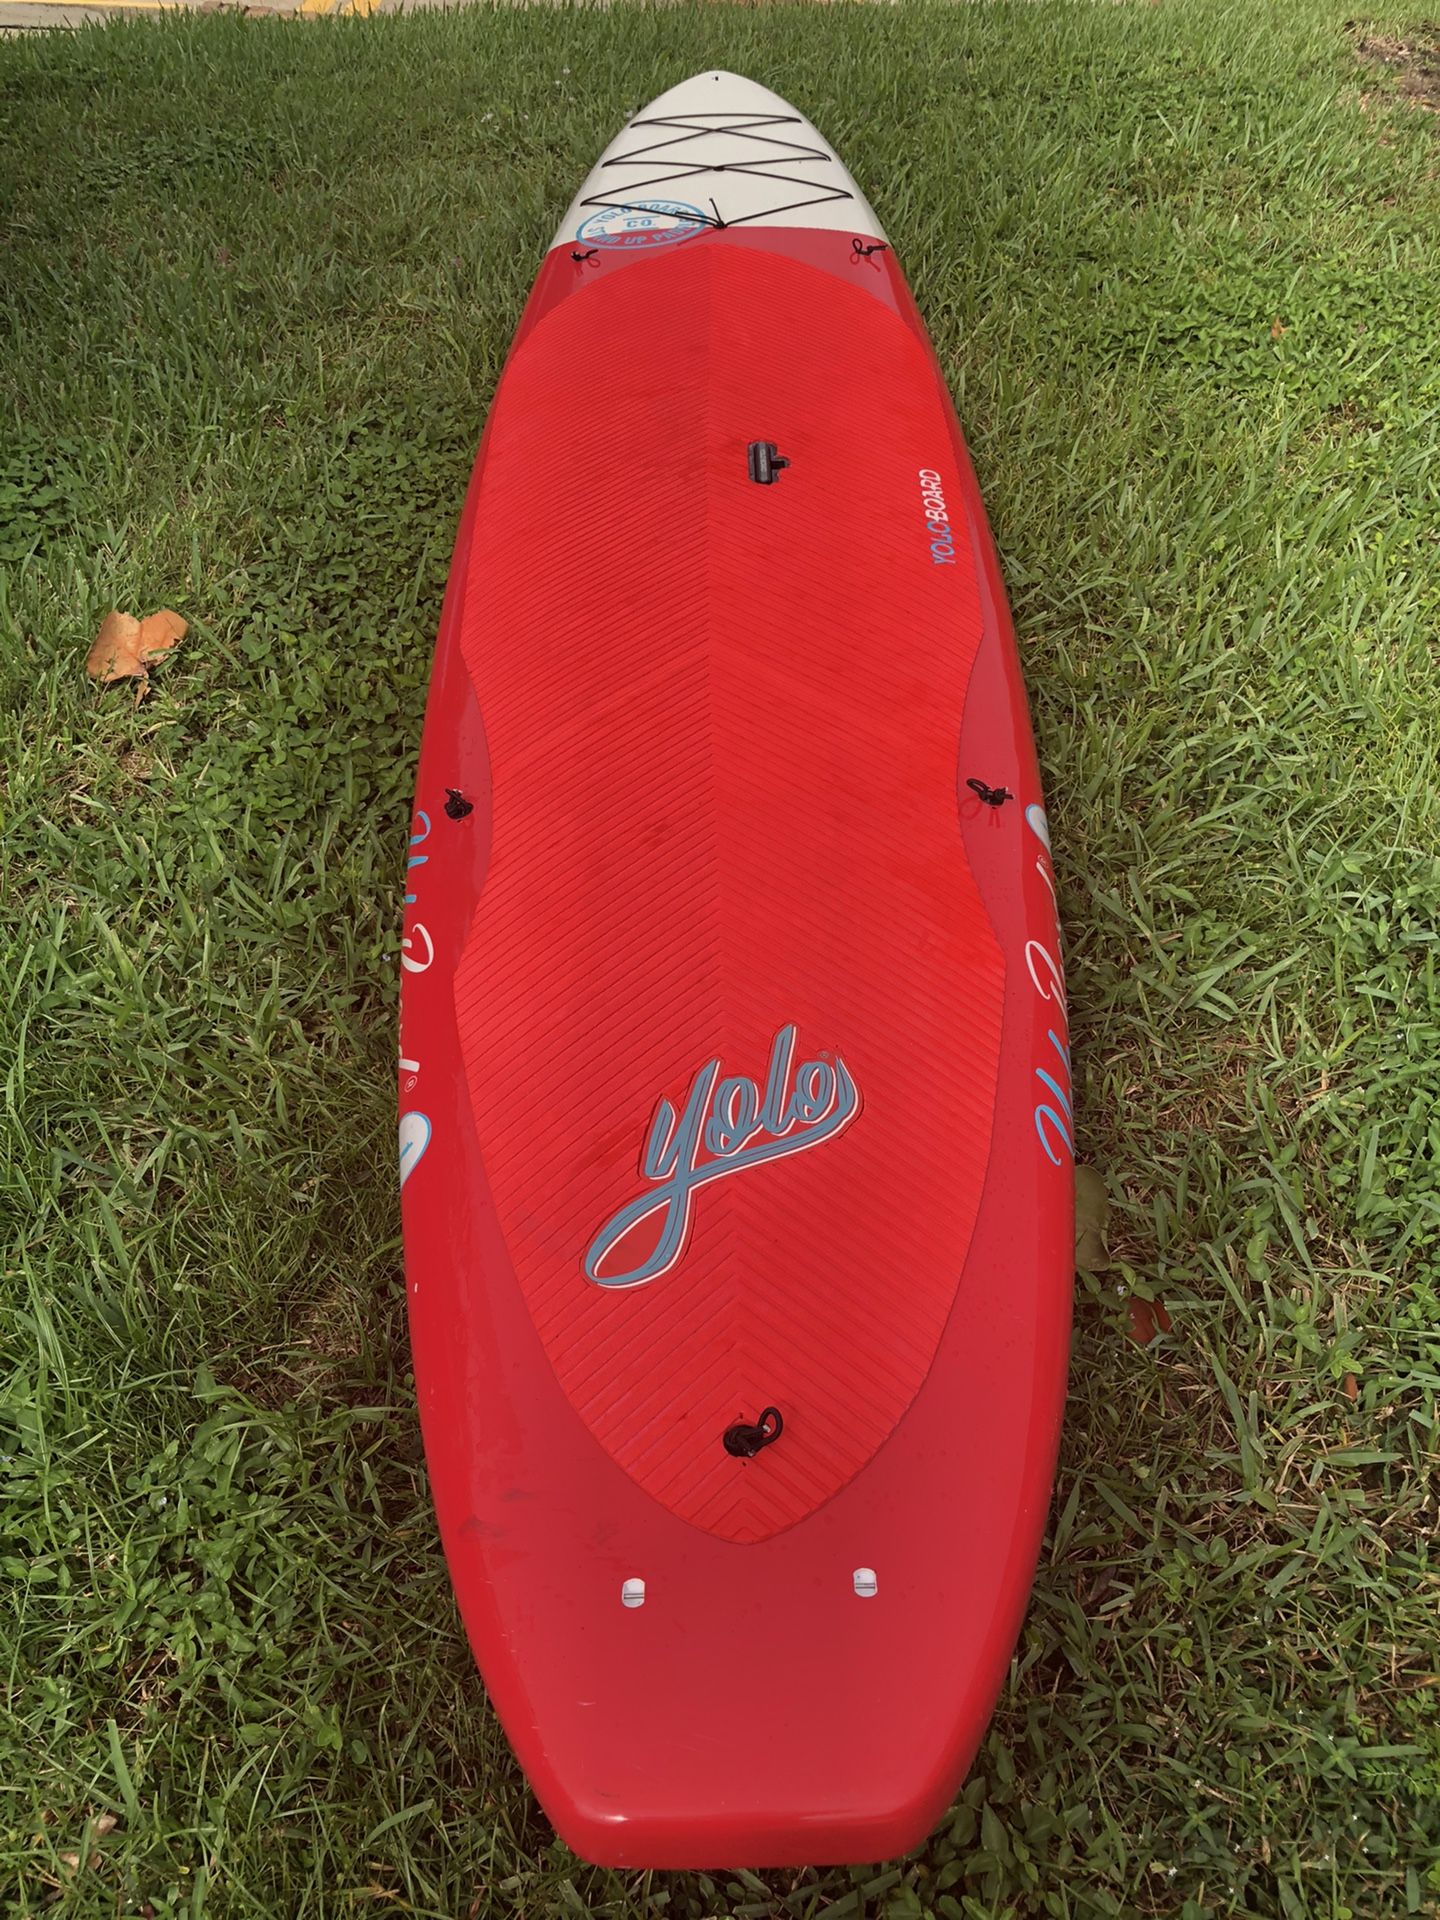 12’ YOLO Paddle Board